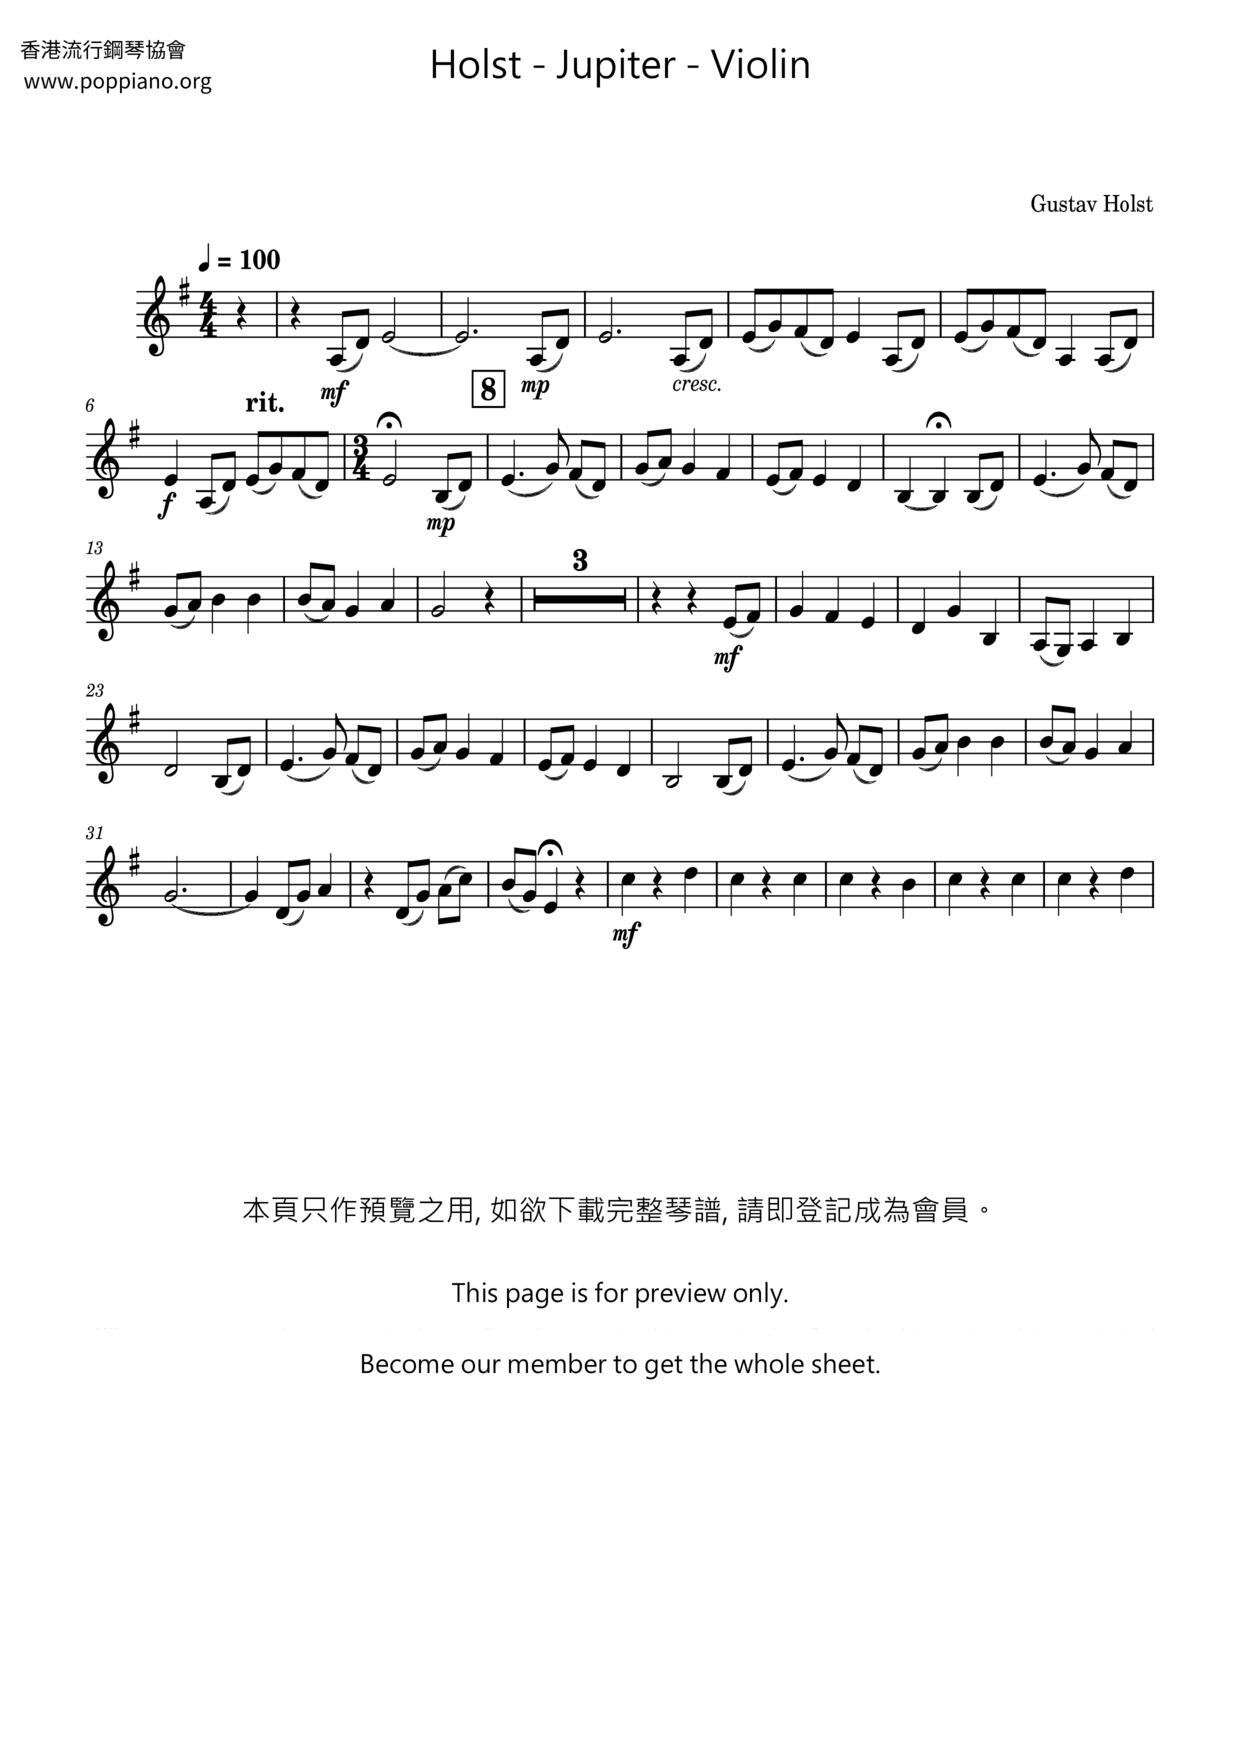 Jupiter - Violin Score